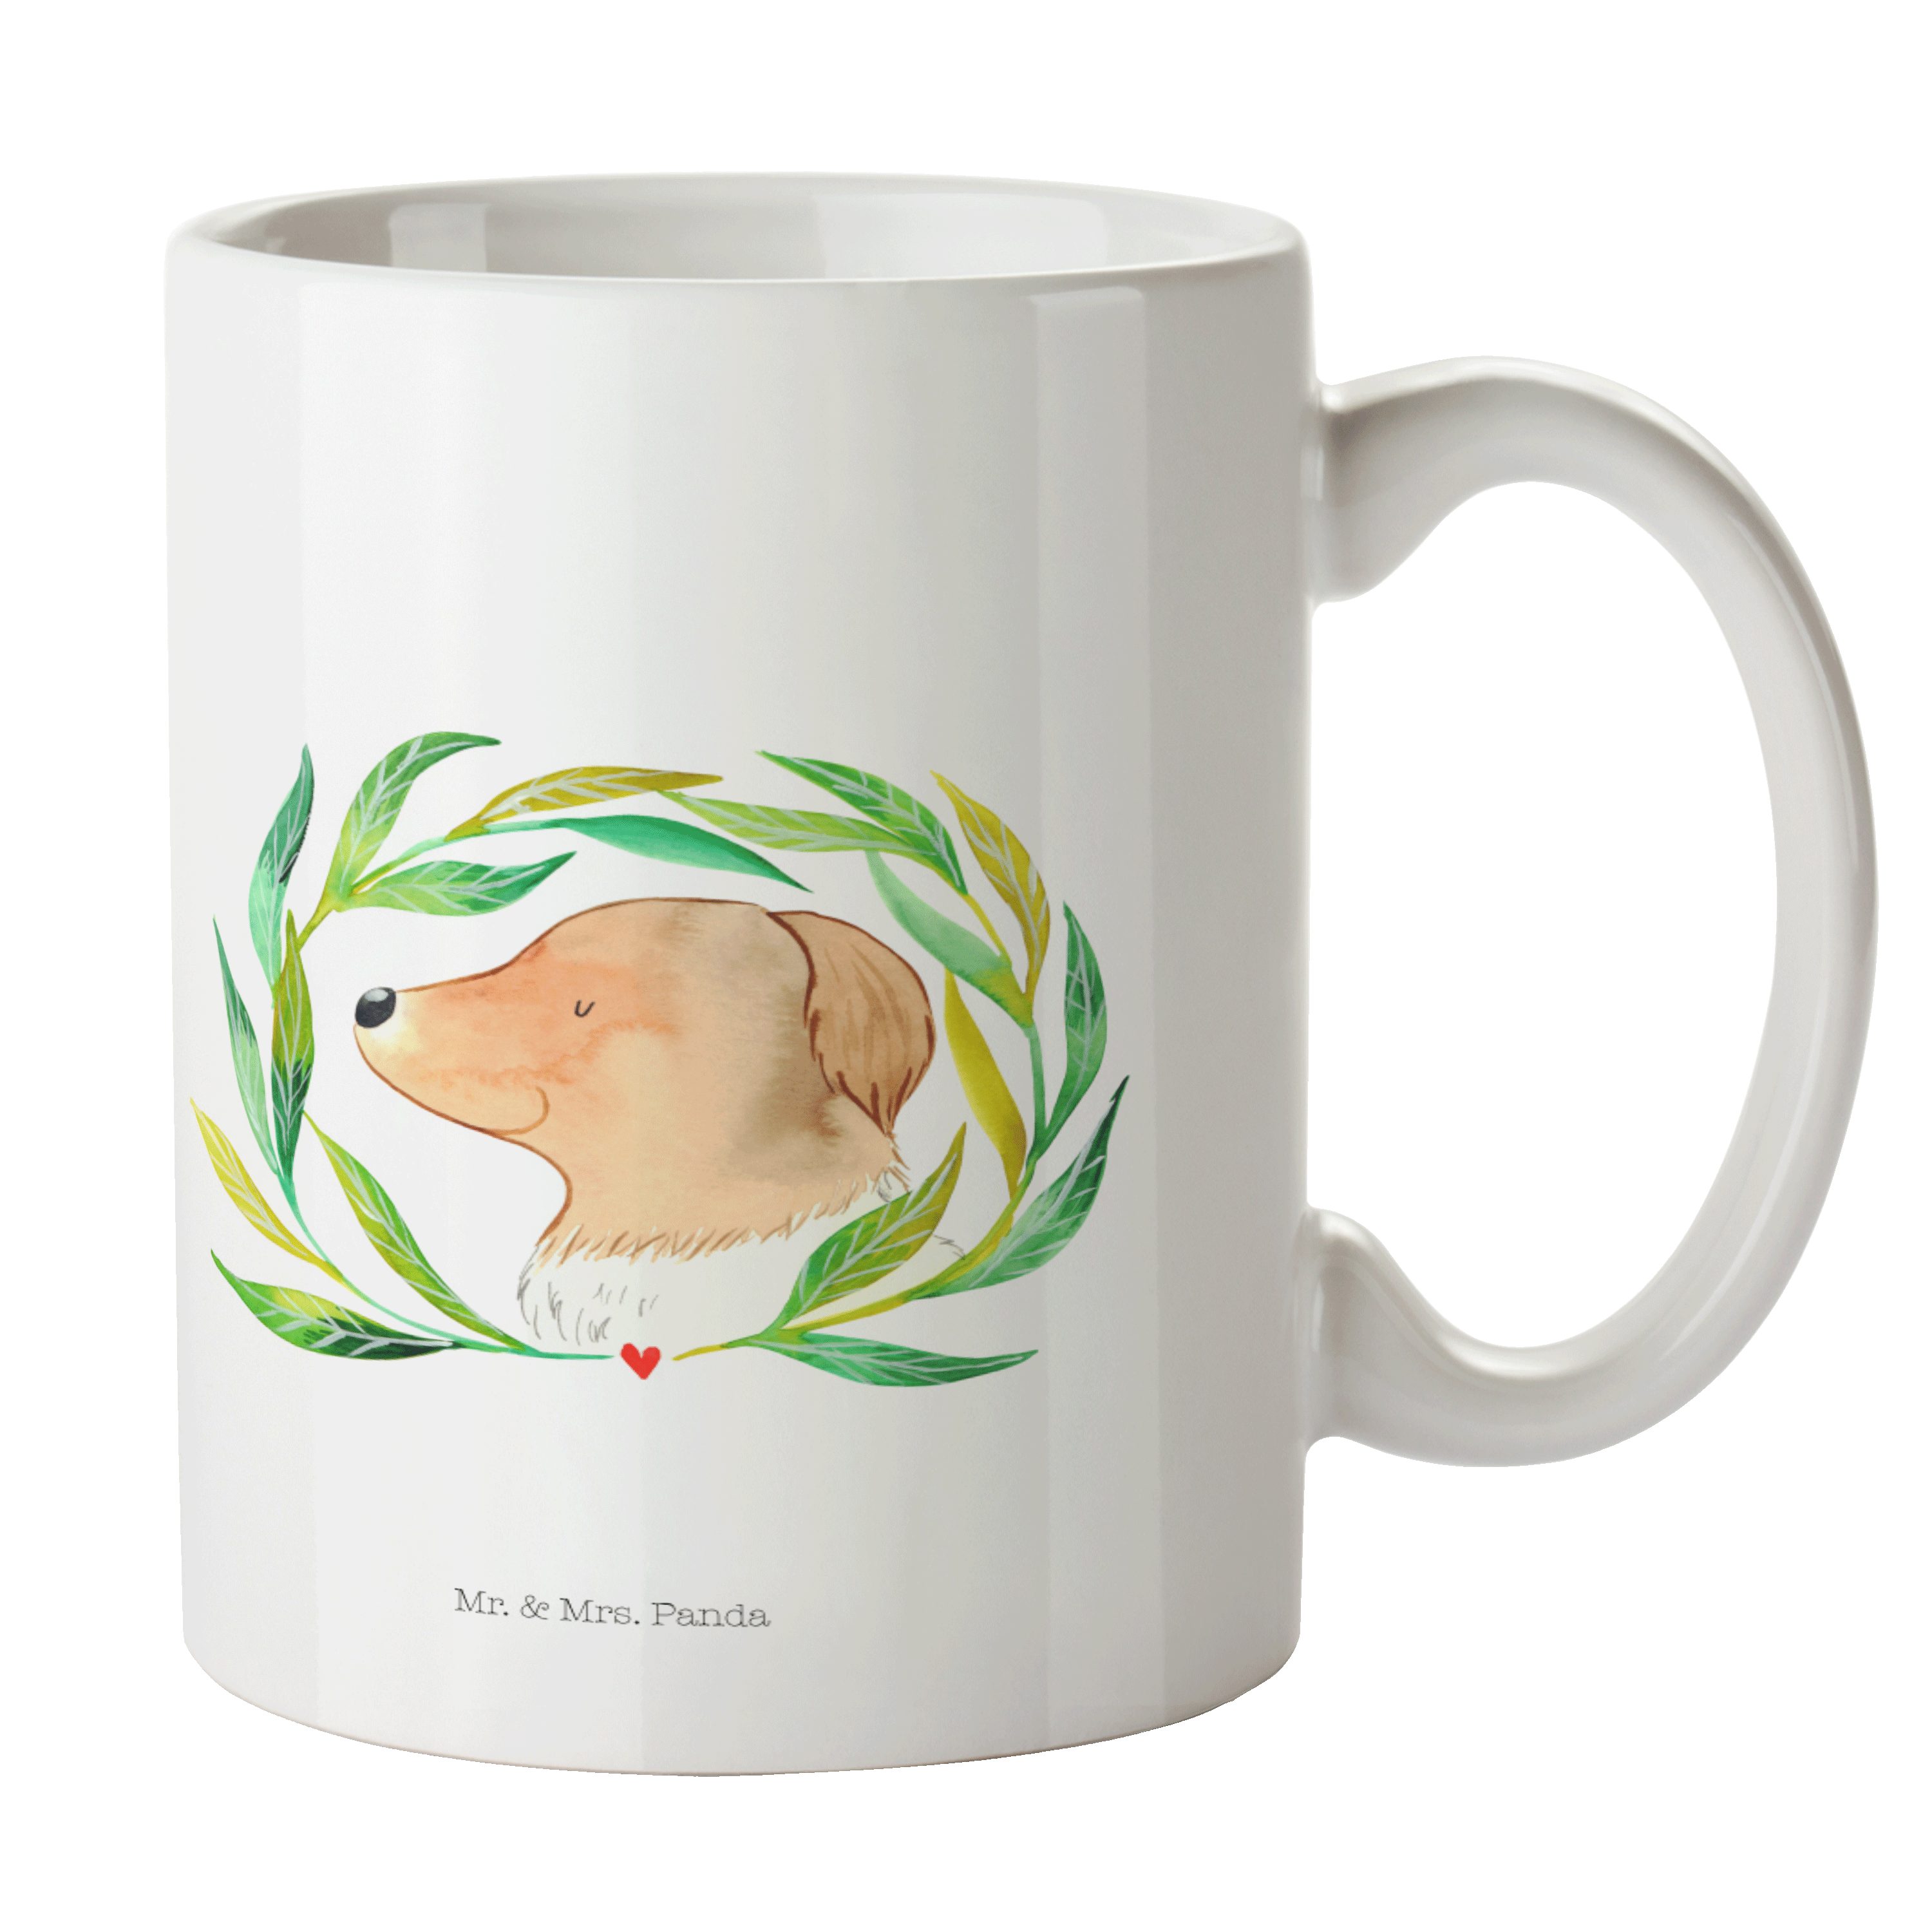 Mr. & Mrs. Panda Tasse Hund Ranke - Weiß - Geschenk, Hundeliebe, Büro Tasse, Haustier, Hunde, Keramik